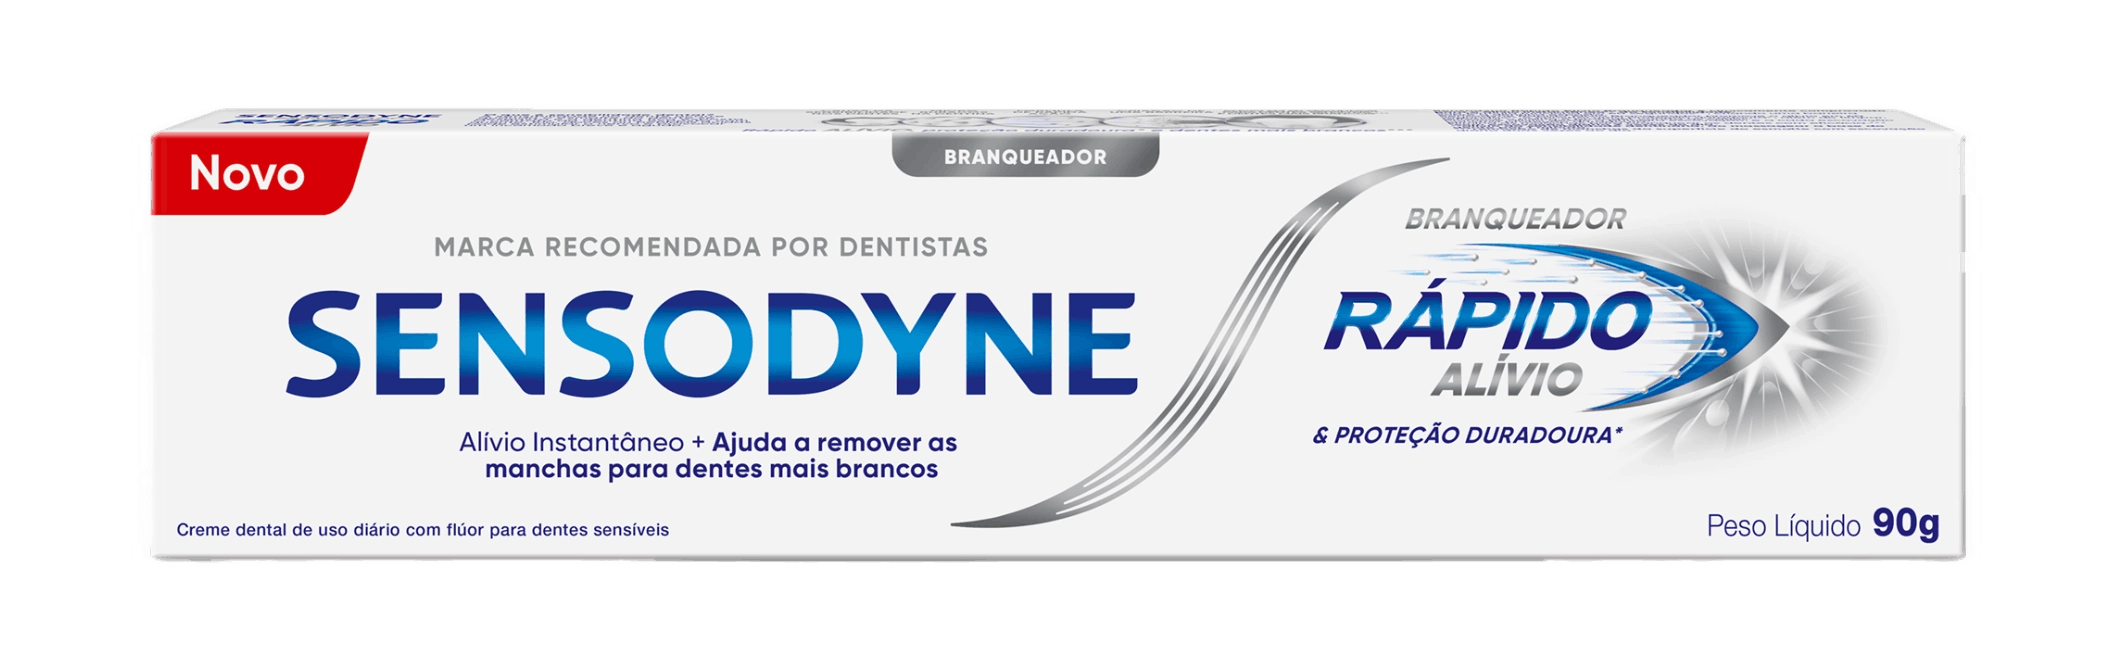 Sensodyne Rapid Relief Whitening toothpaste